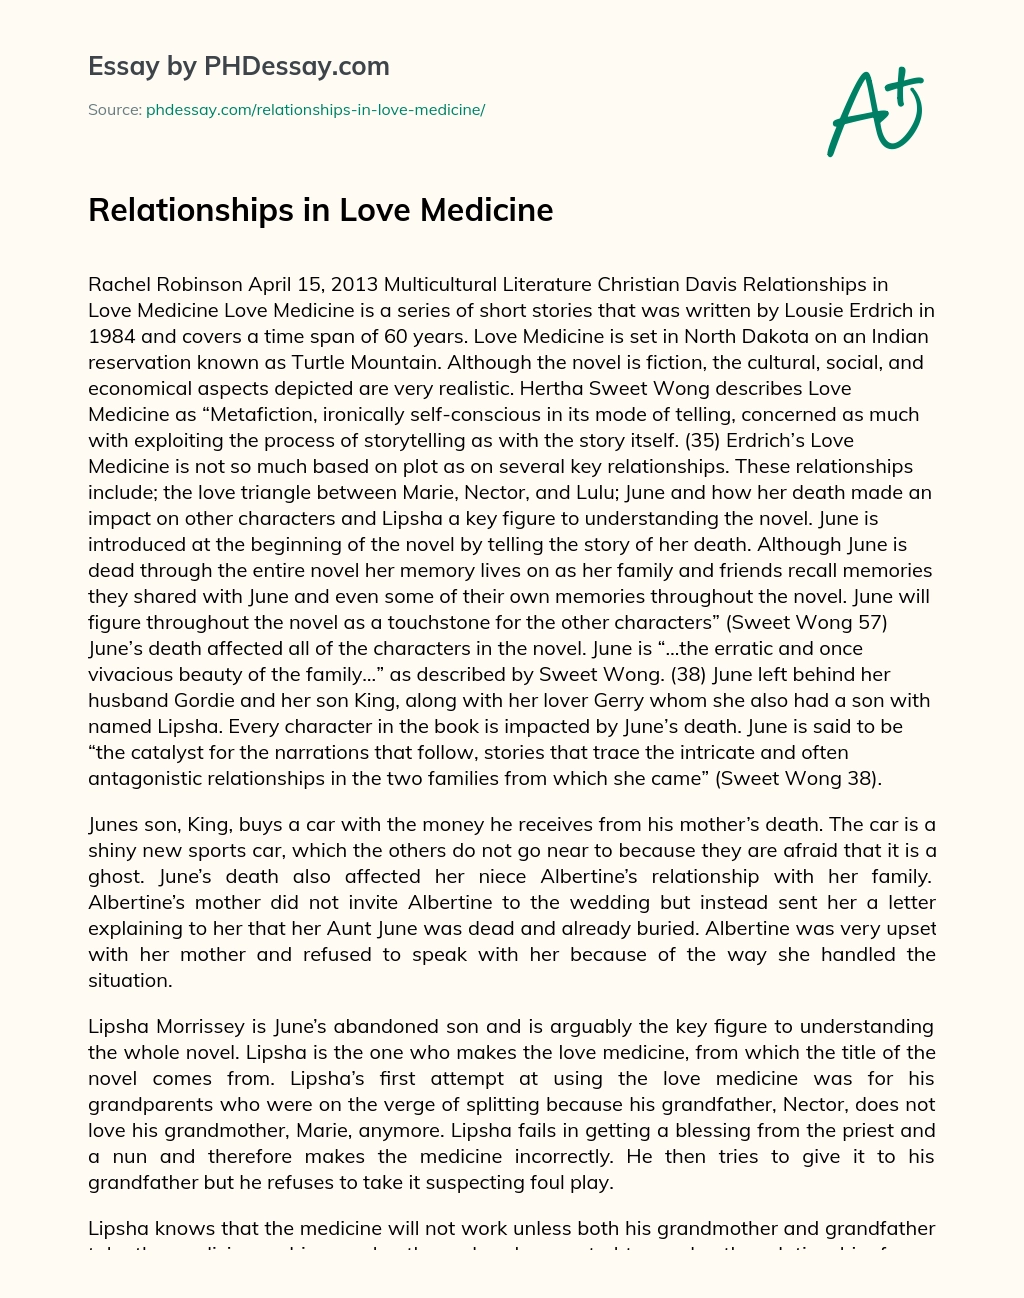 Relationships in Love Medicine essay